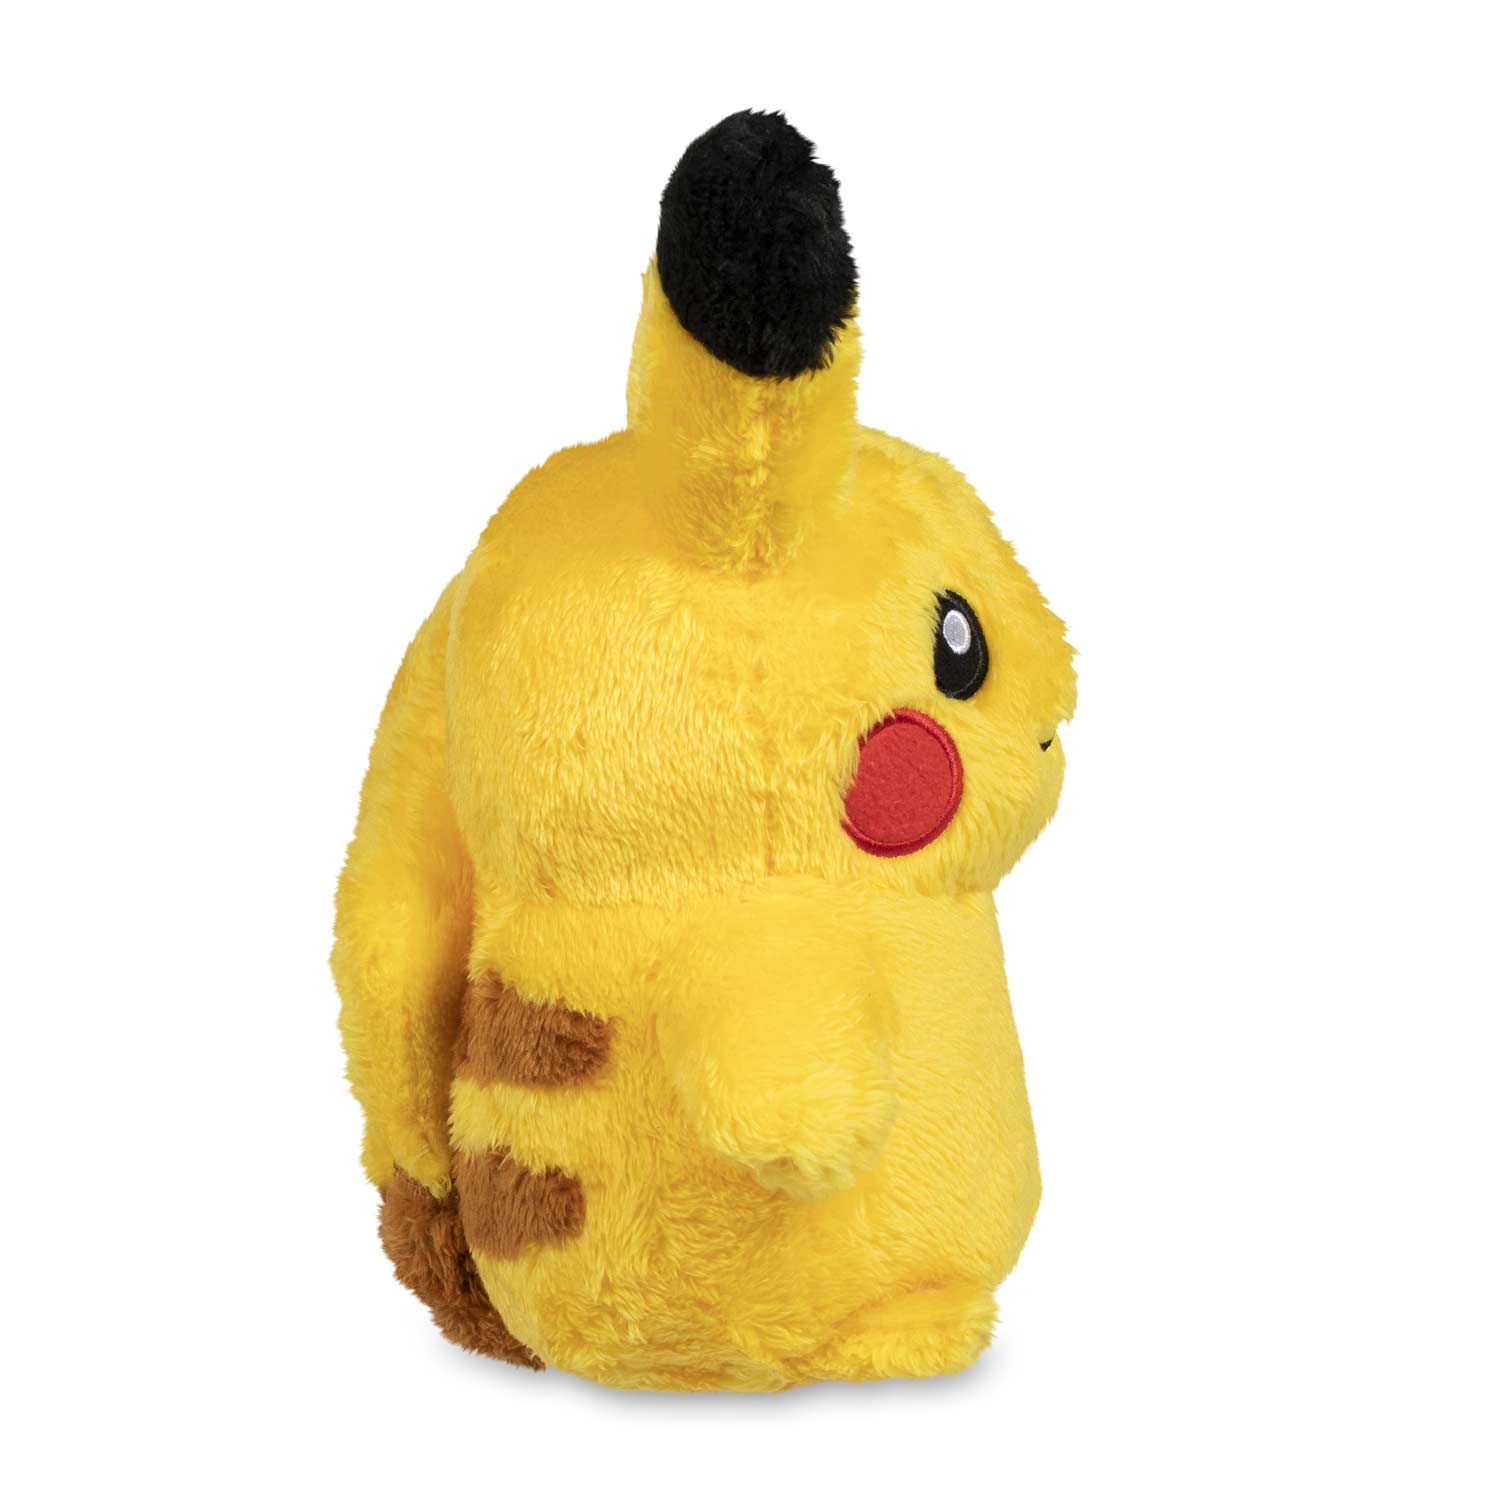 Details about   Pokémon Plush Stuffed Animal Toy cuddly for all fans cute Pokémon Pokachu ...